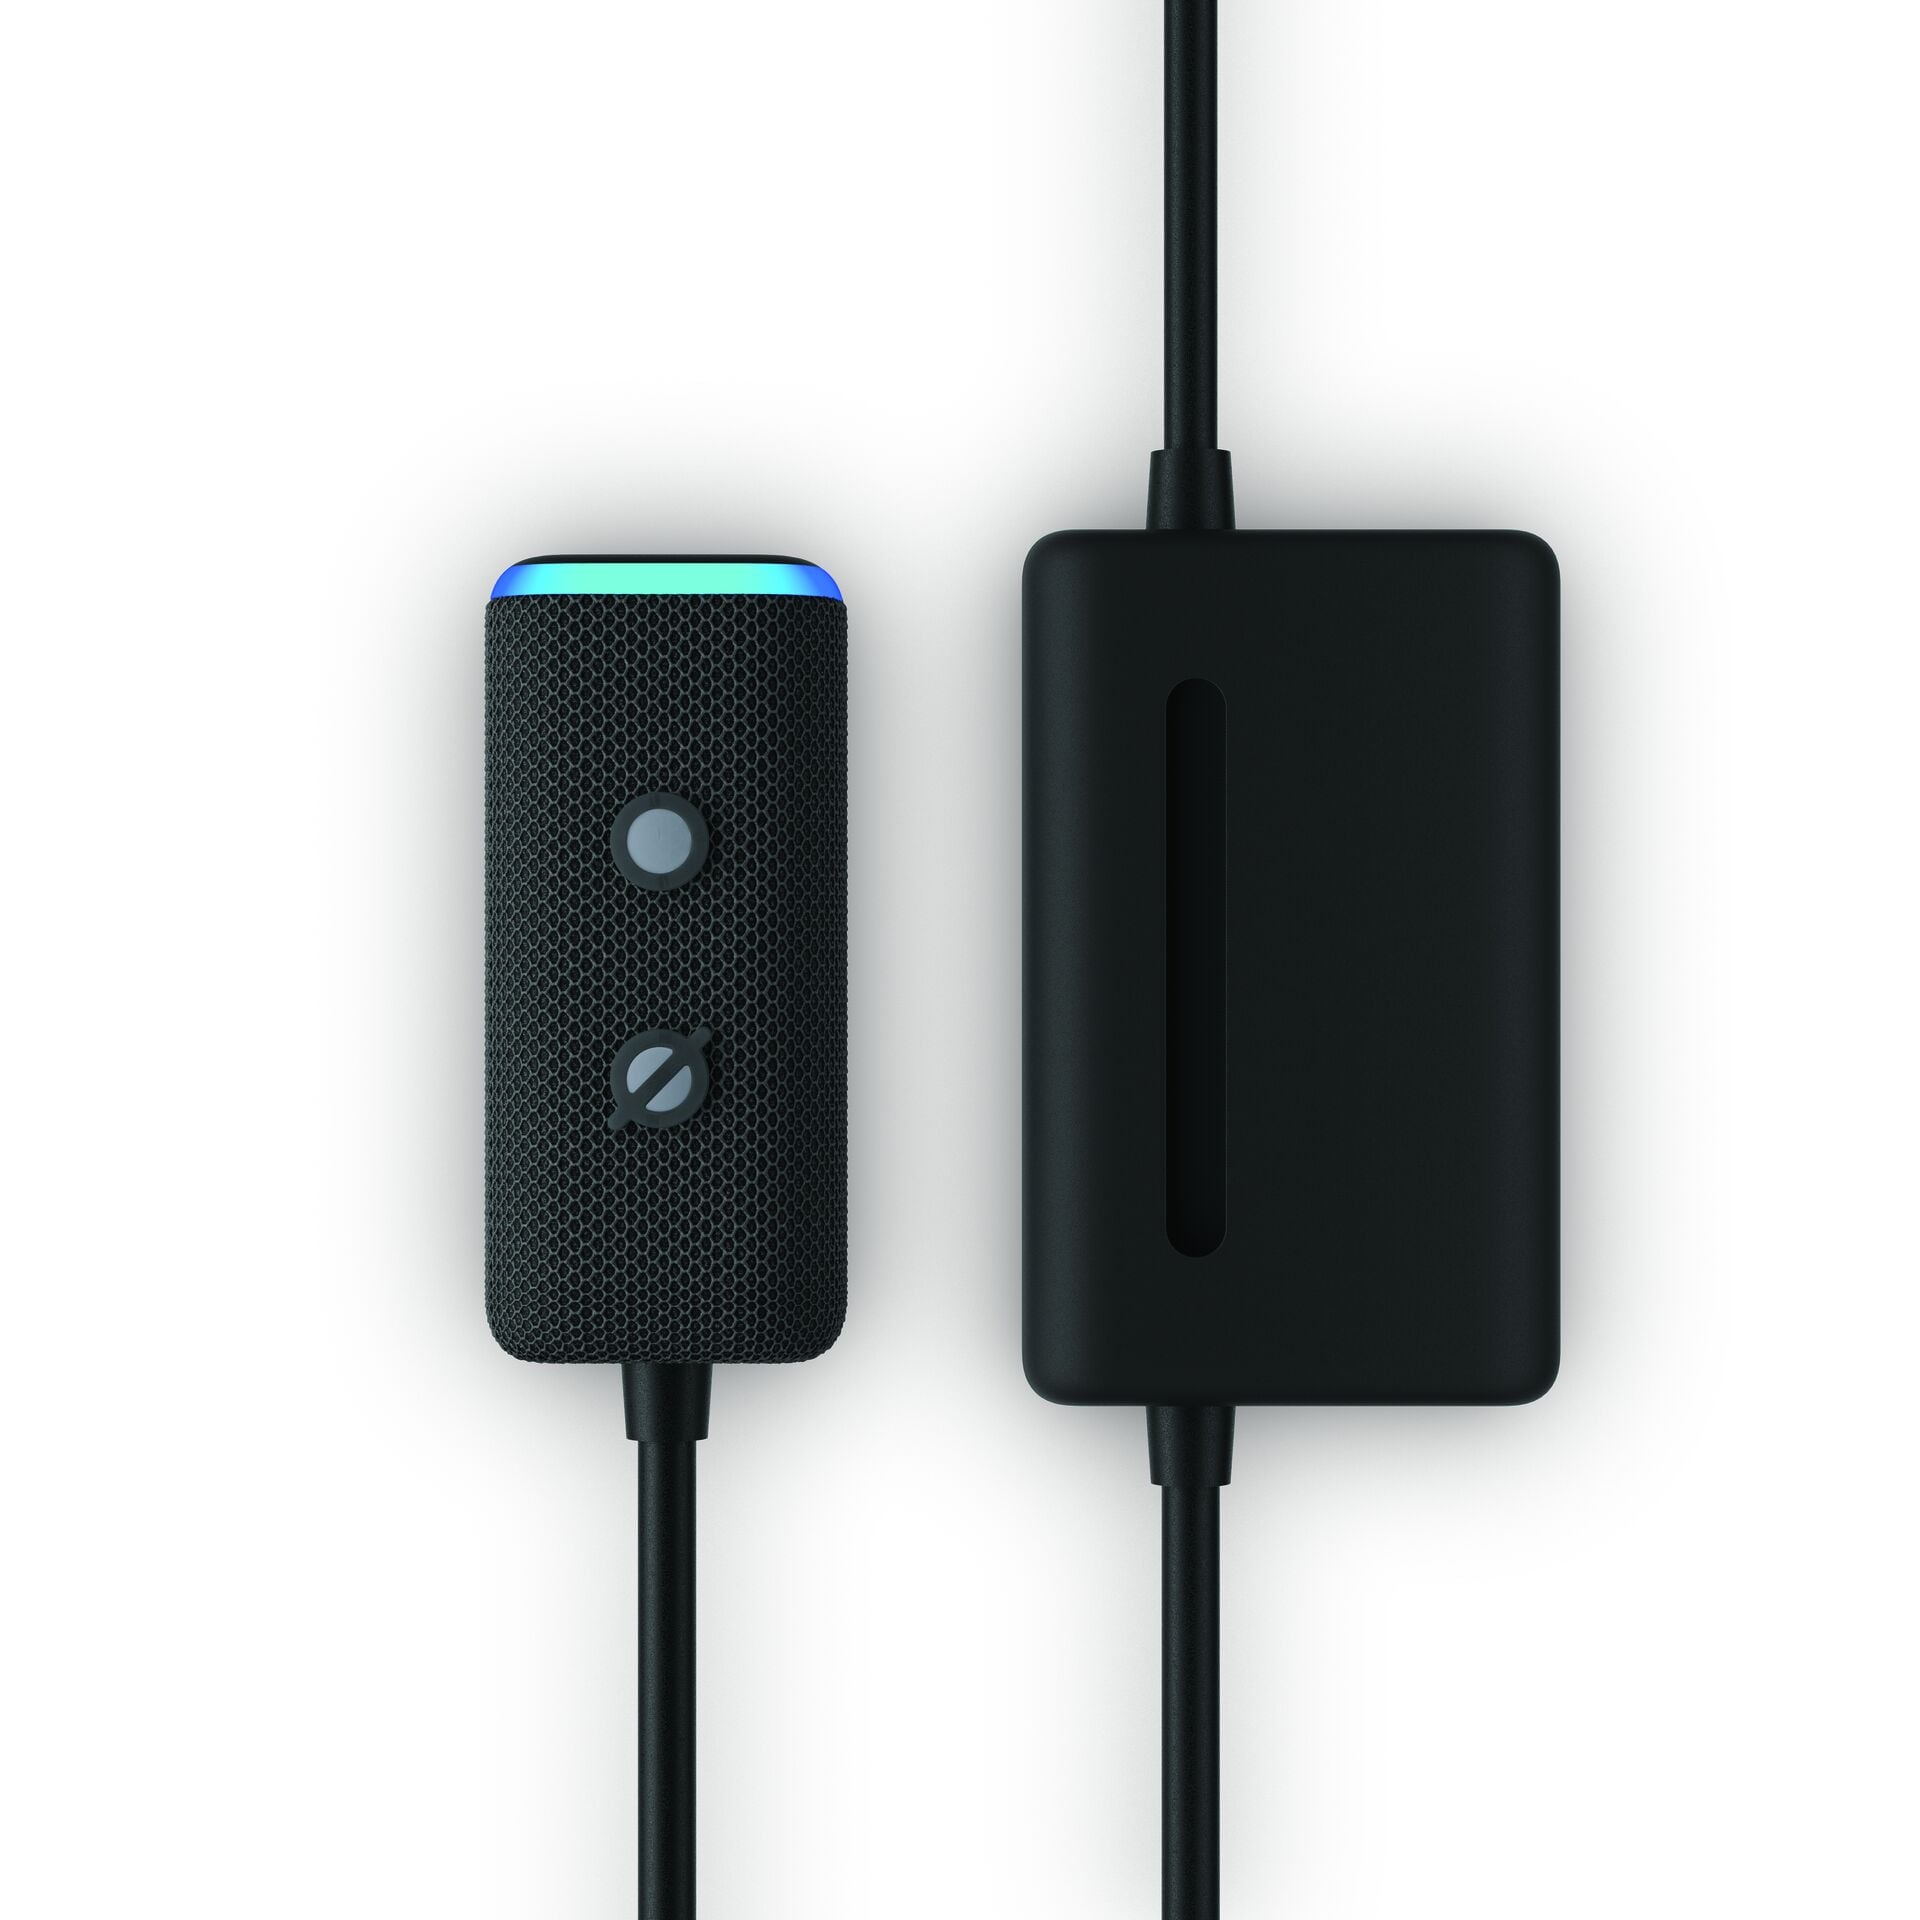 Echo Auto (2nd Gen) with Alexa Voice Assistant B09X27YPS1